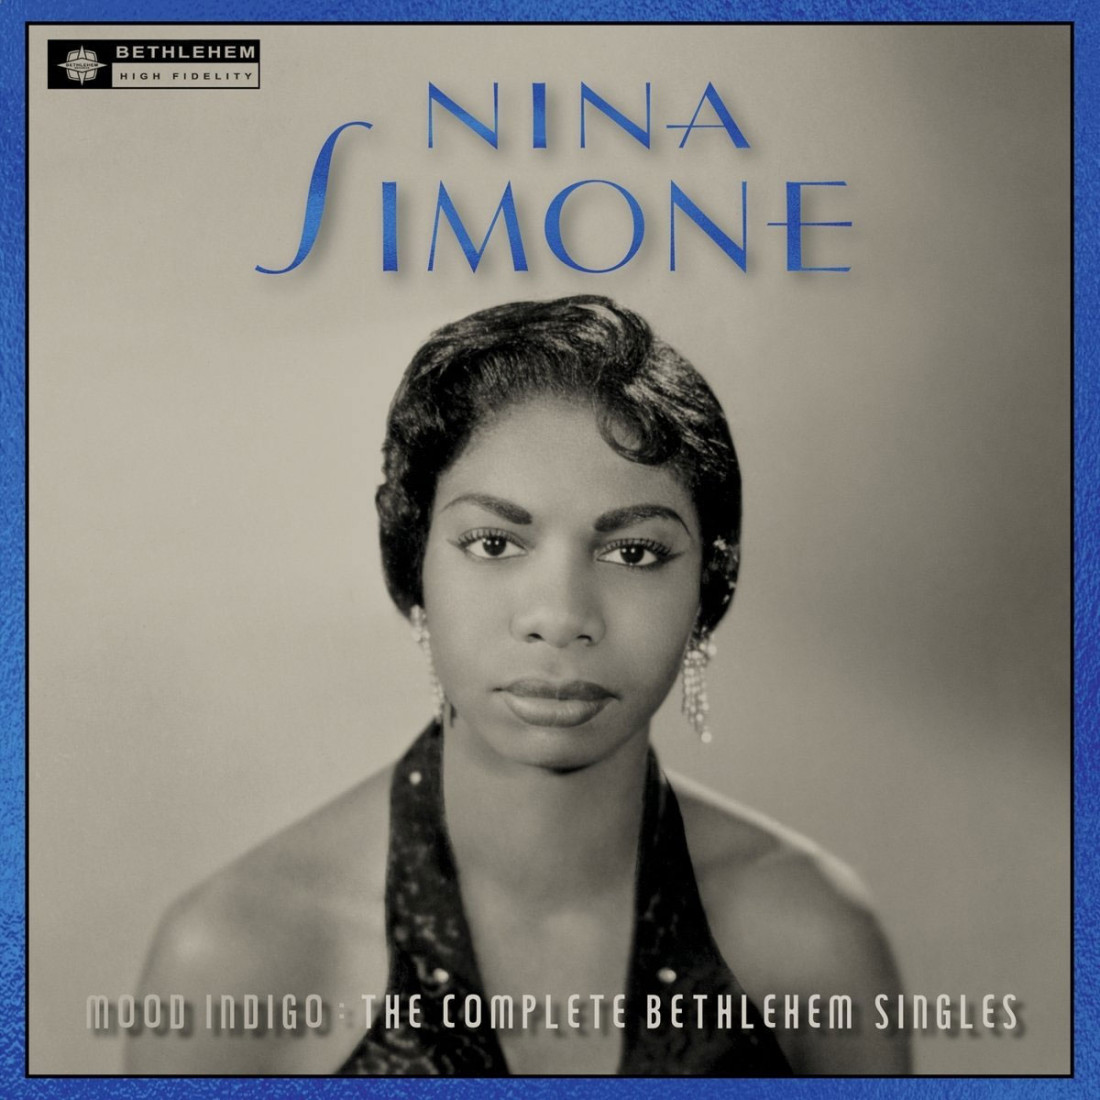 Album review: ‘Mood Indigo’ by Nina Simone | Mountain Xpress